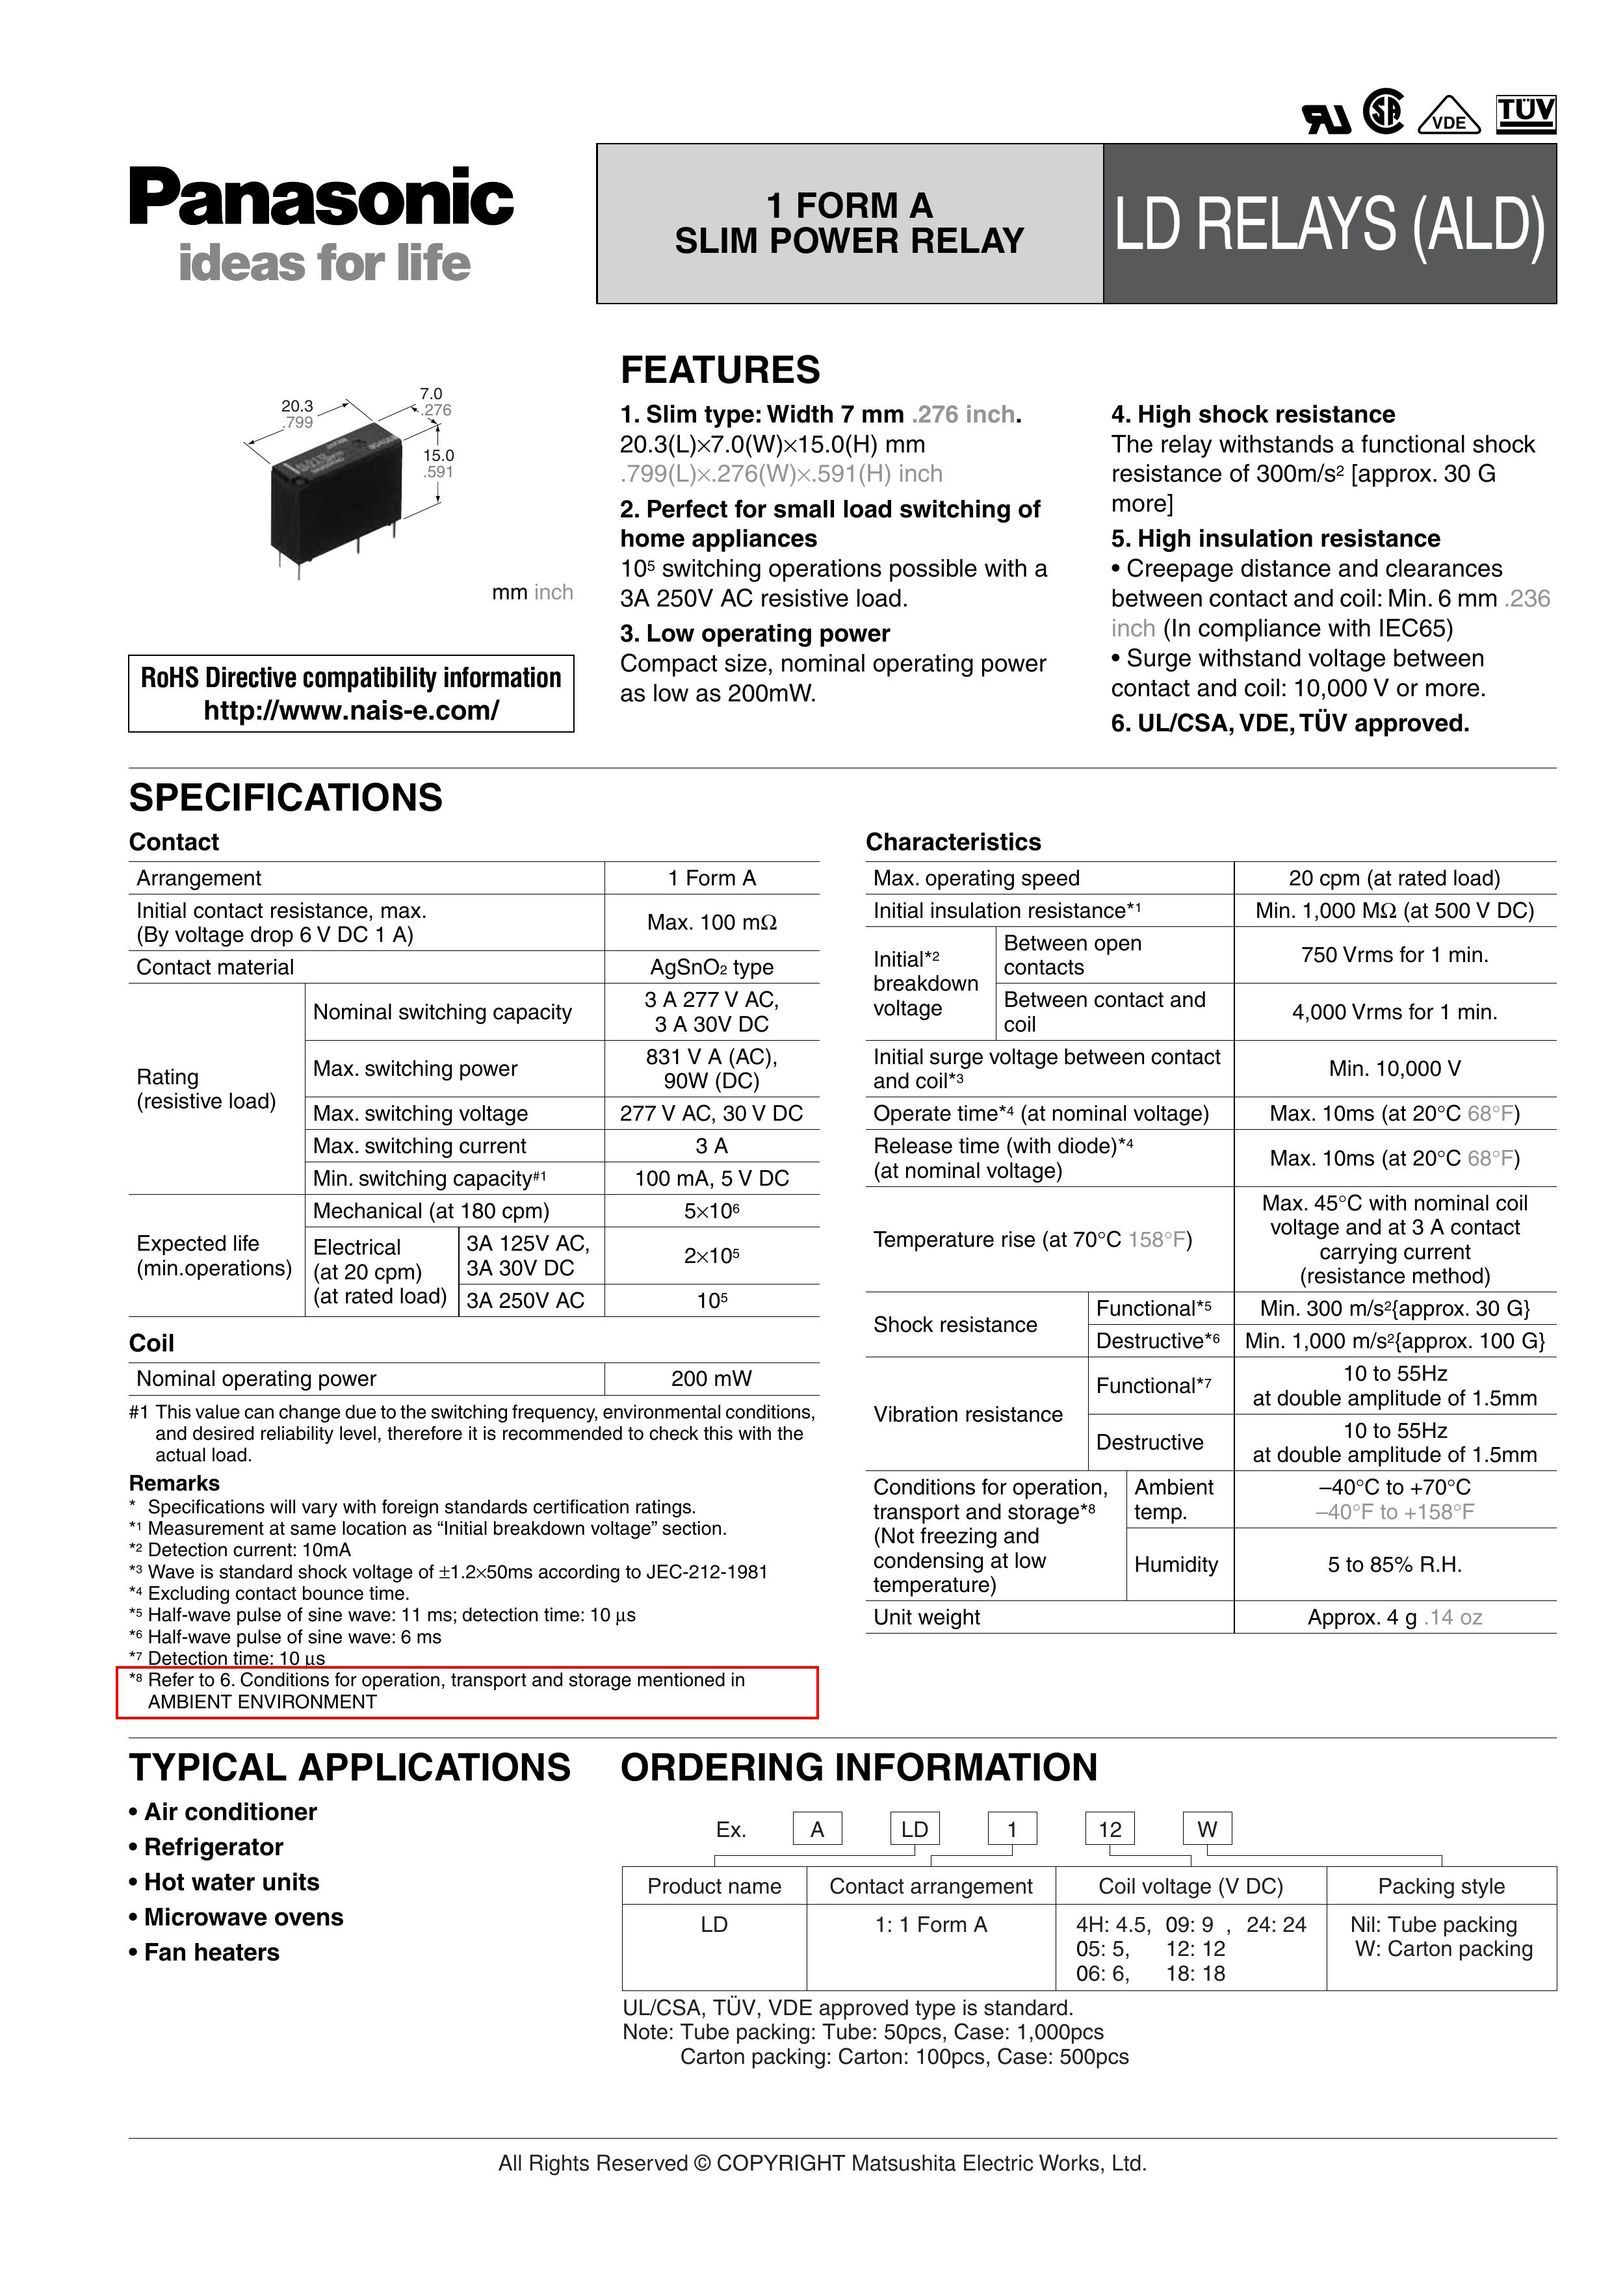 Panasonic LD Relays (ALD) Switch User Manual